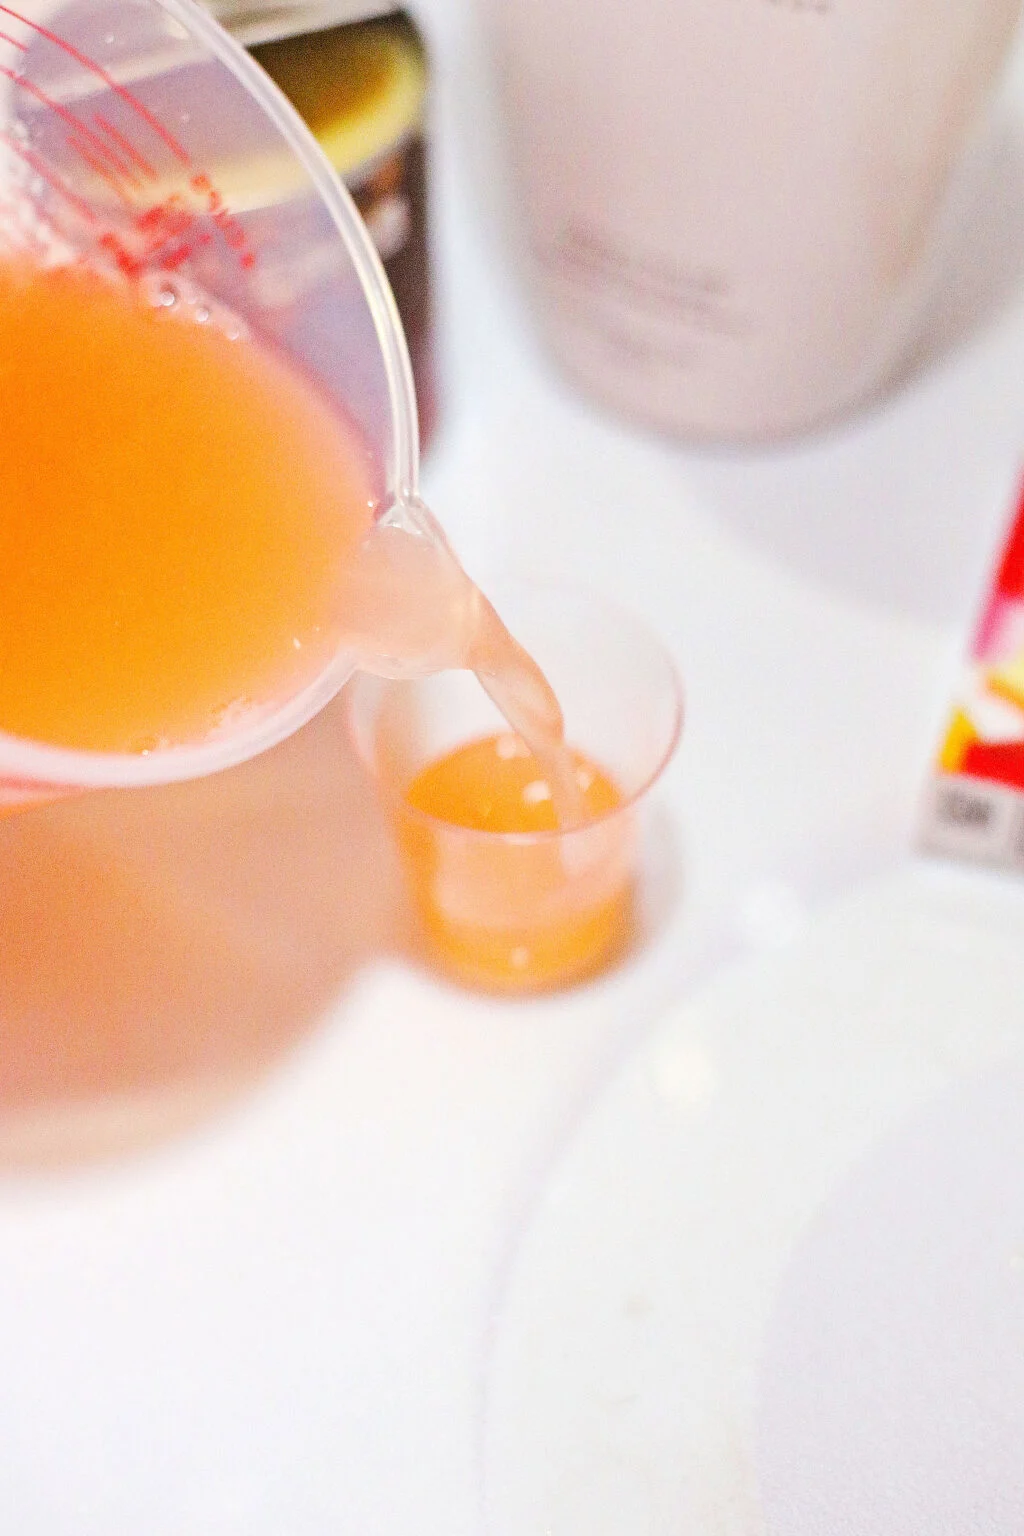 peach jello mixture poured into shot glass